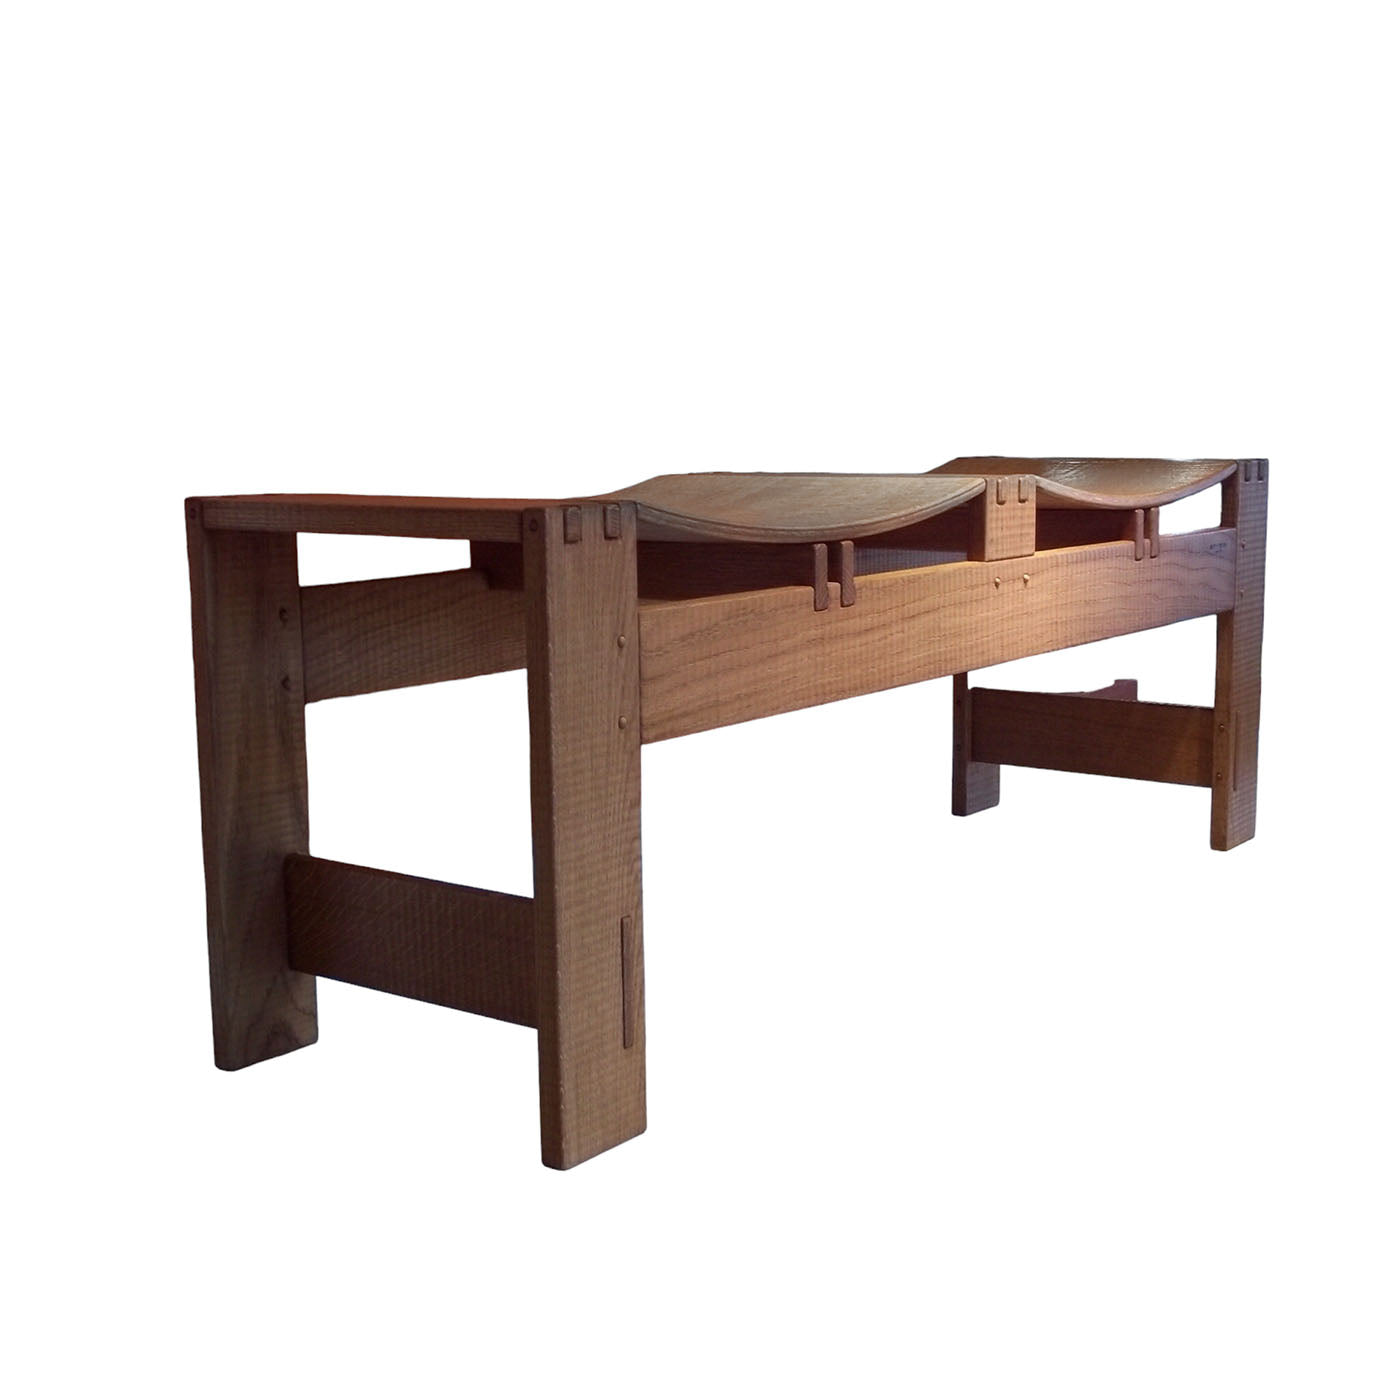 Panca degli Sposi 2-Seater Wooden Bench - Alternative view 1